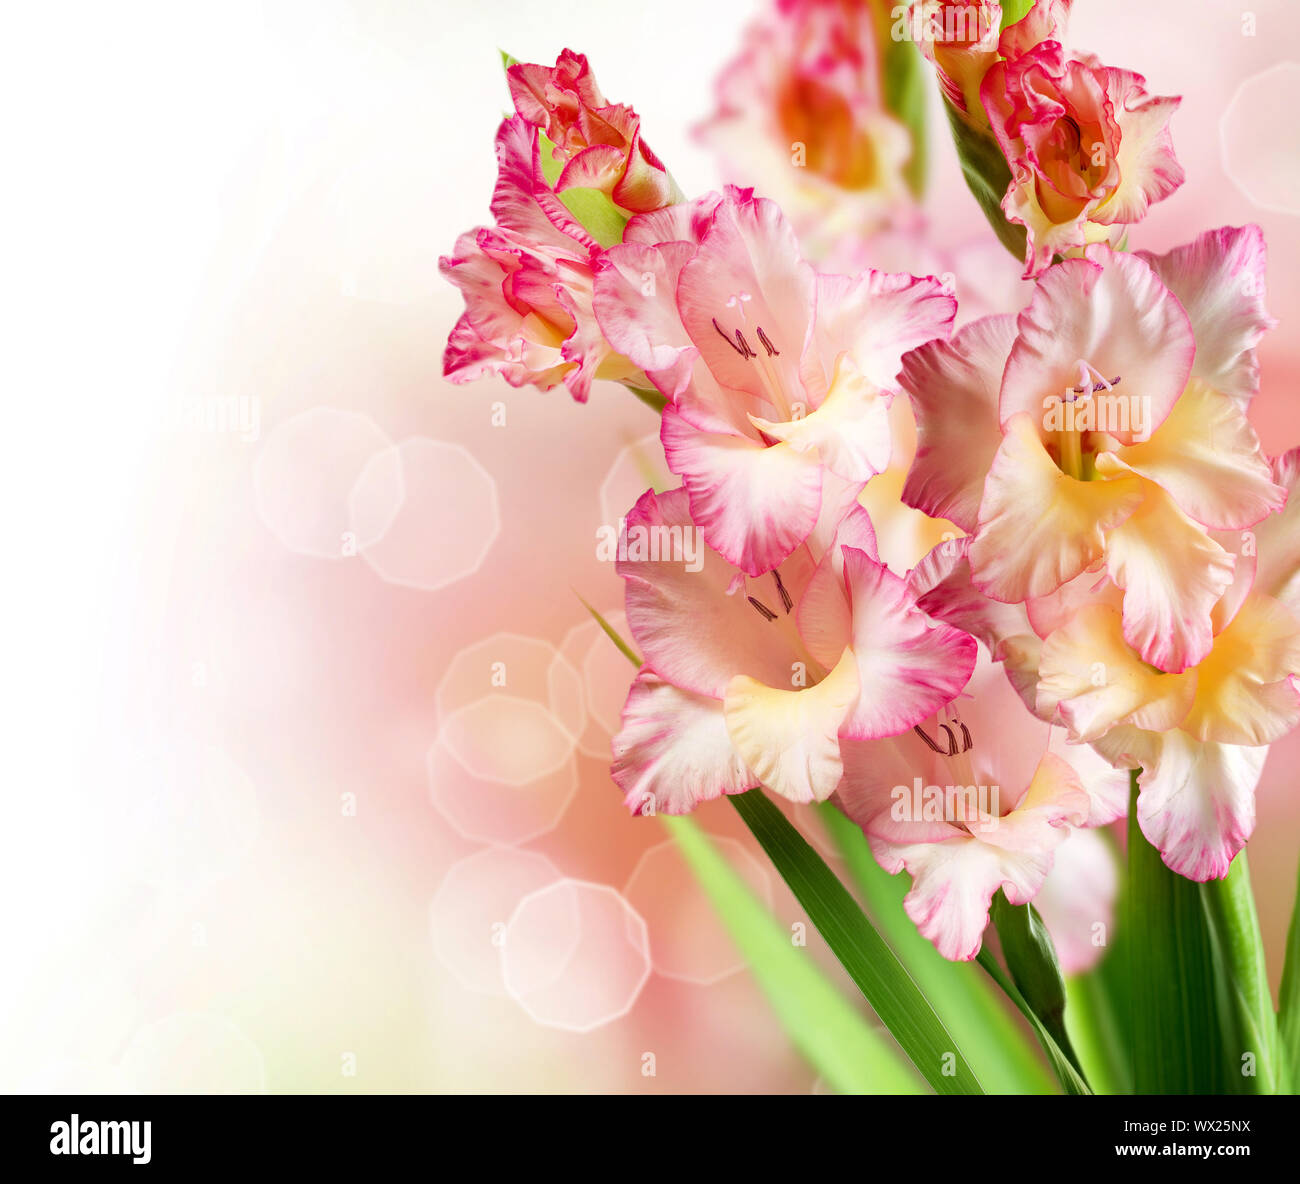 Gladiolus Autumn Flowers Border Design Stock Photo